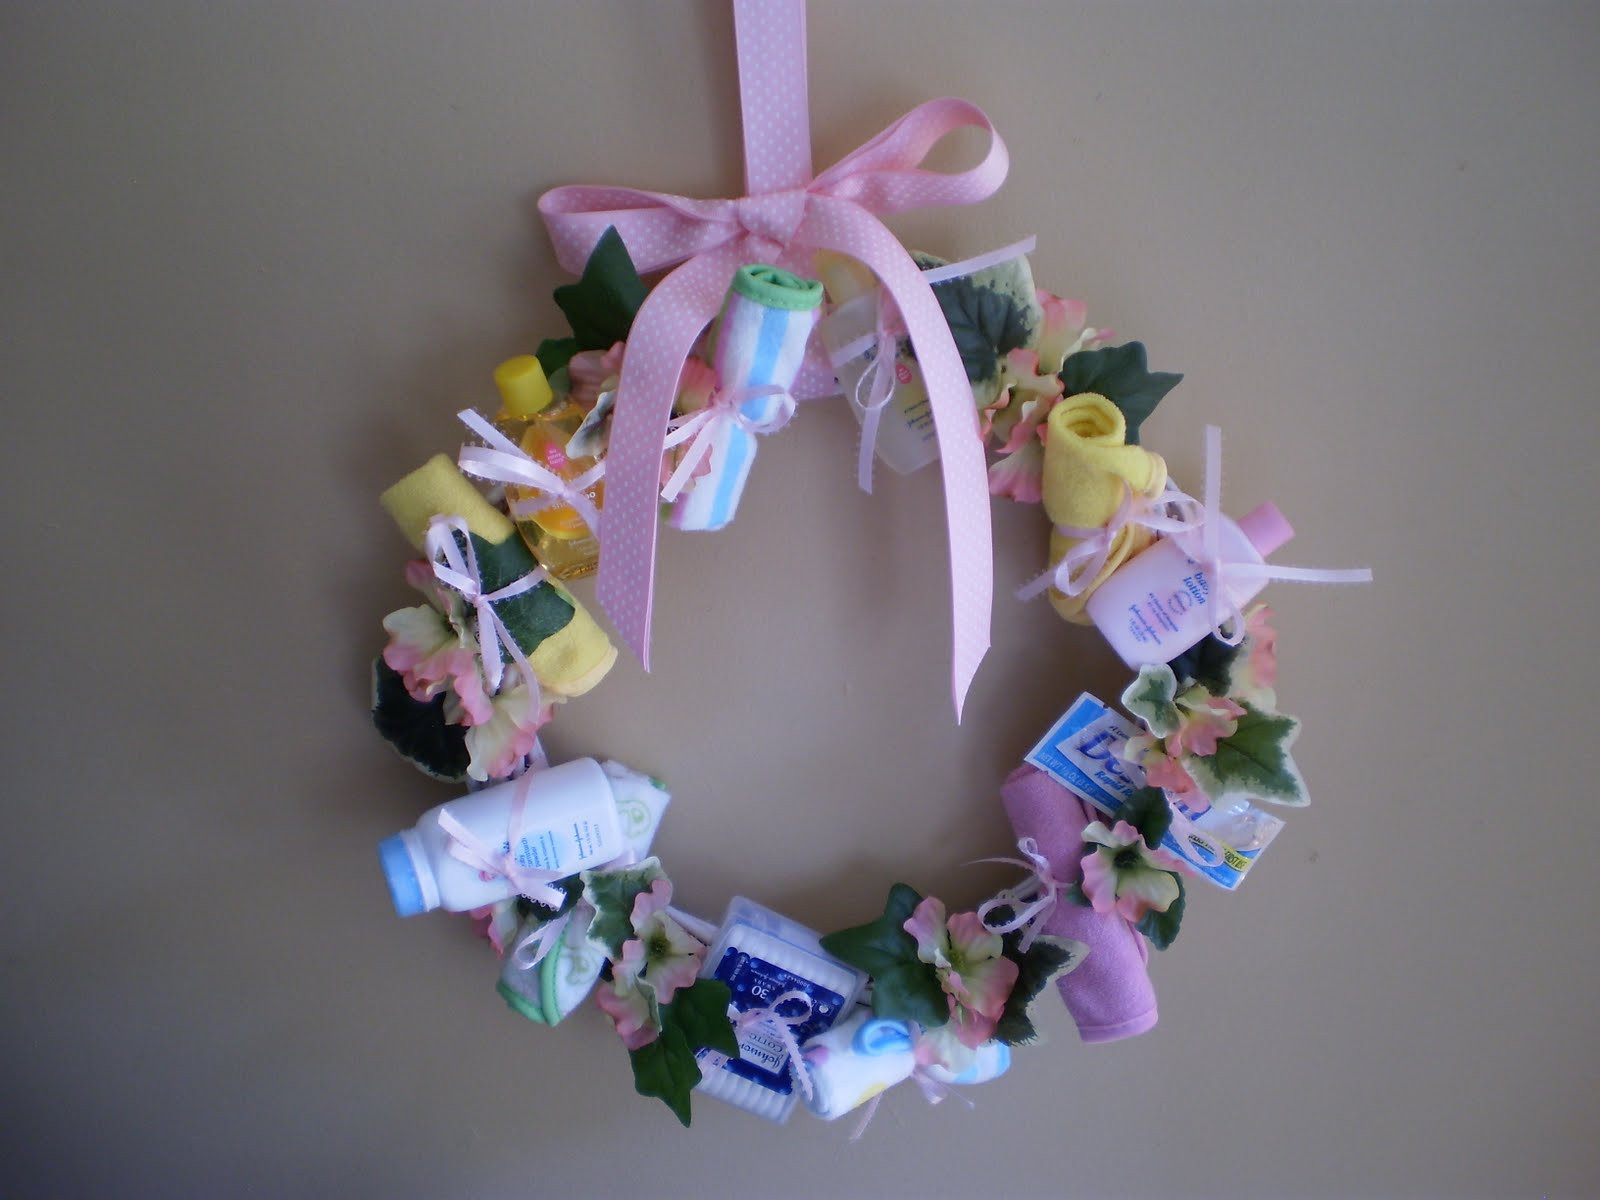 Baby Shower Gift Ideas For Girl
 e Simple Country Girl A Neat Baby Shower Gift Idea